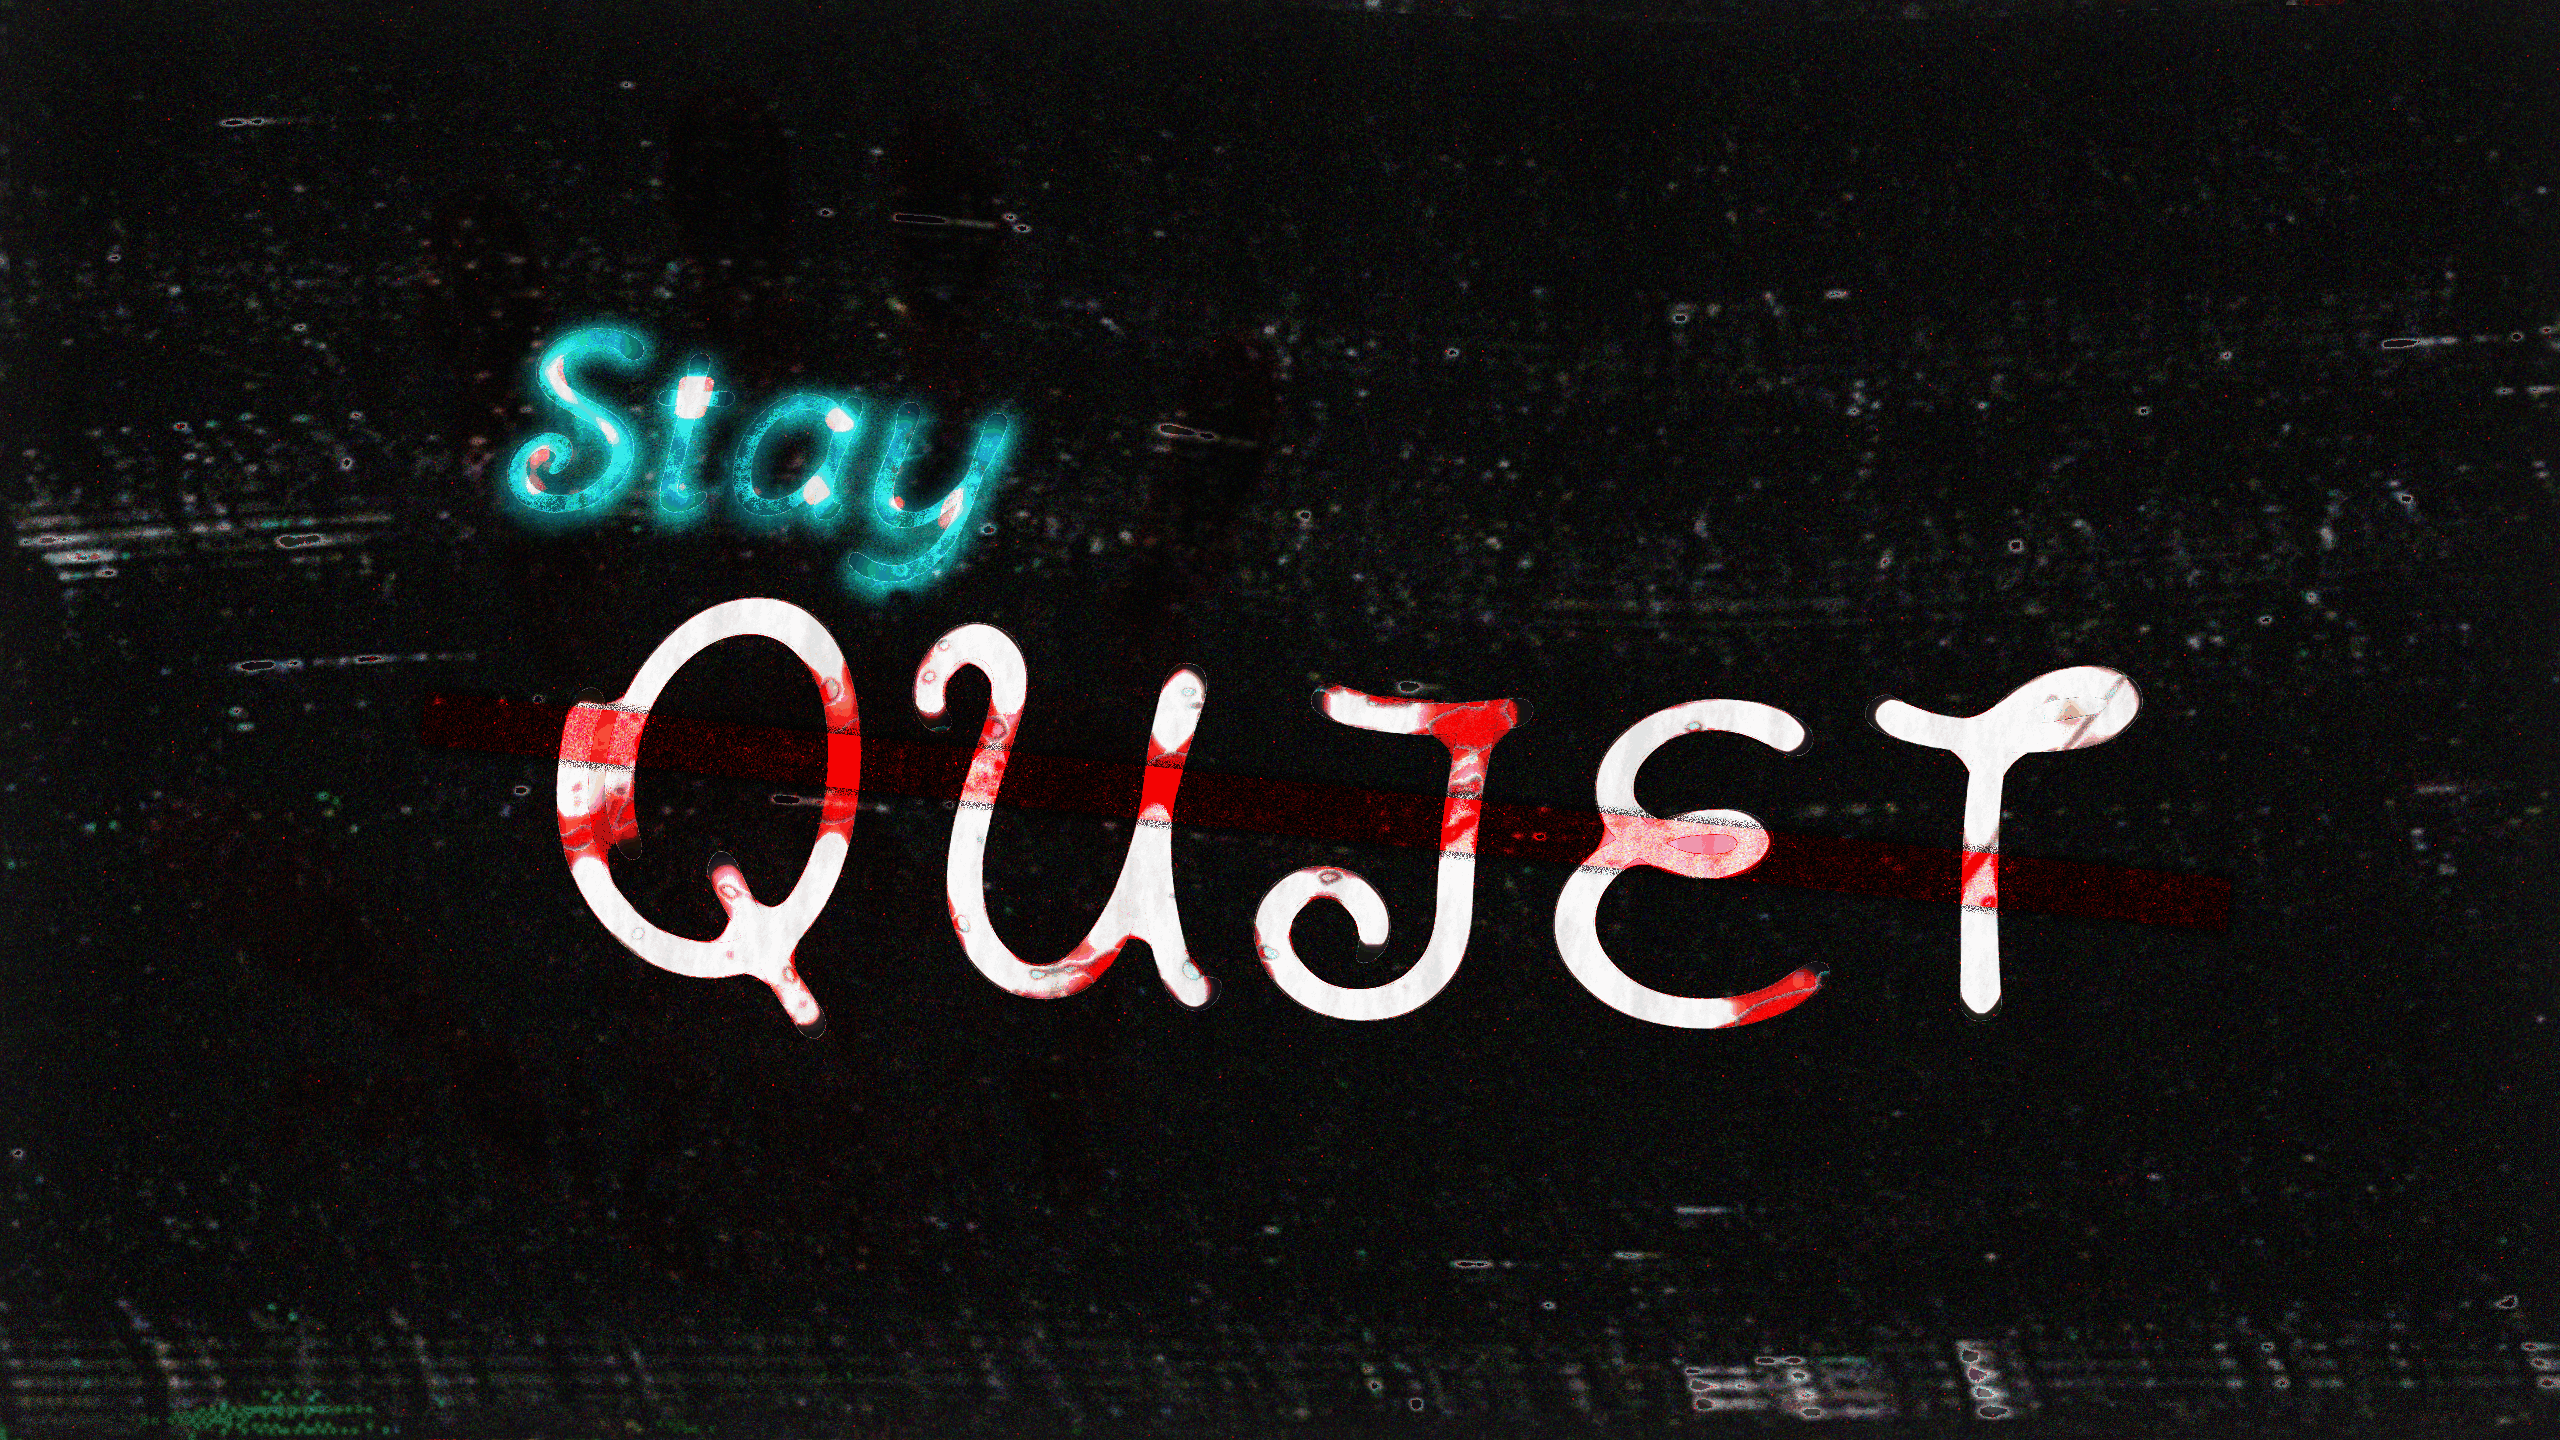 Stay Quiet!